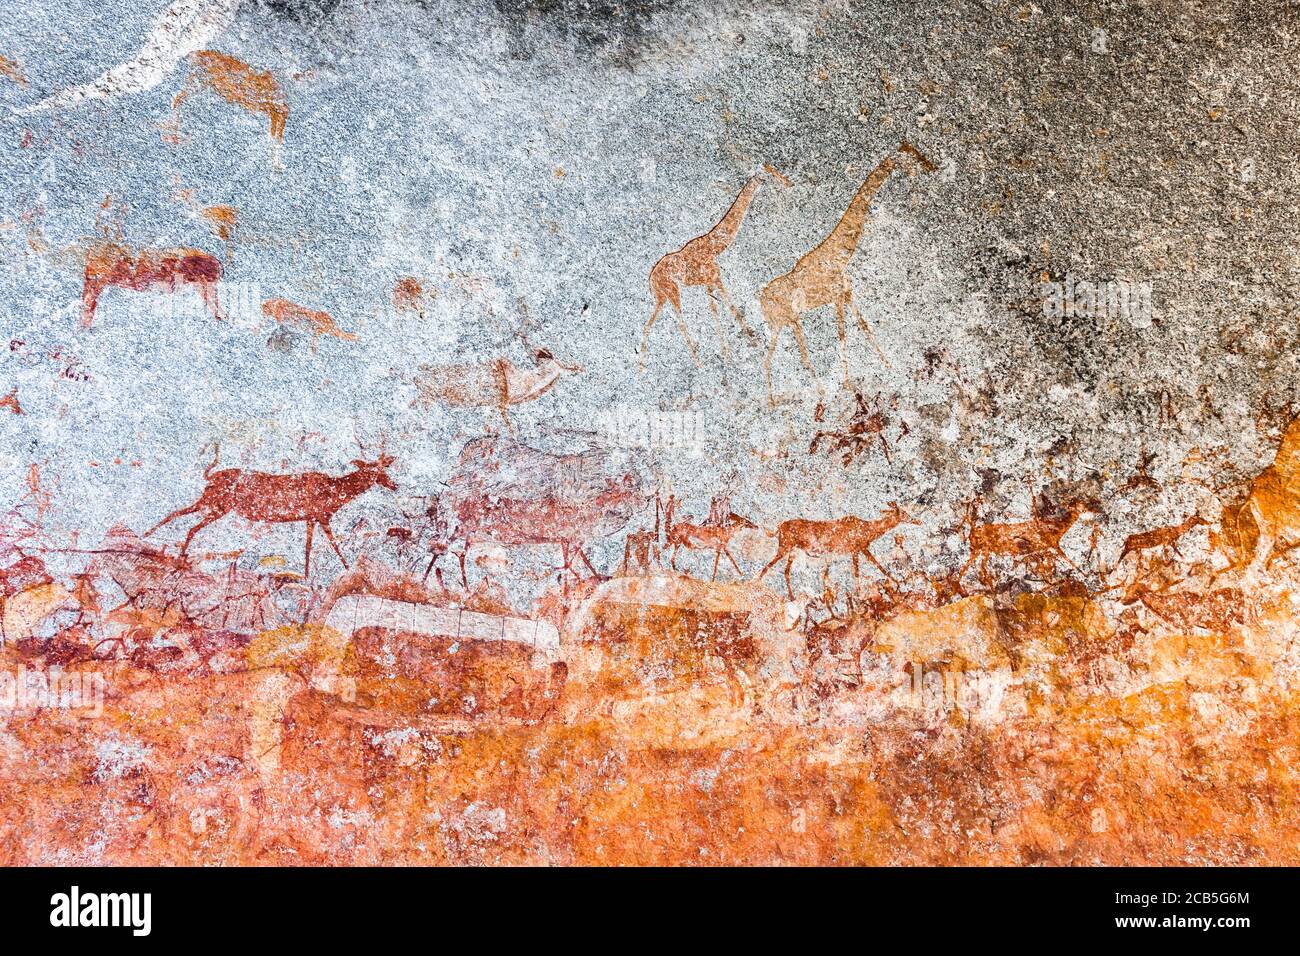 Matobo hills, 'Nswatugi cave' rock painting site, rock art, Matobo National Park, suburbs of Bulawayo, Matabeleland South, Zimbabwe, Africa Stock Photo